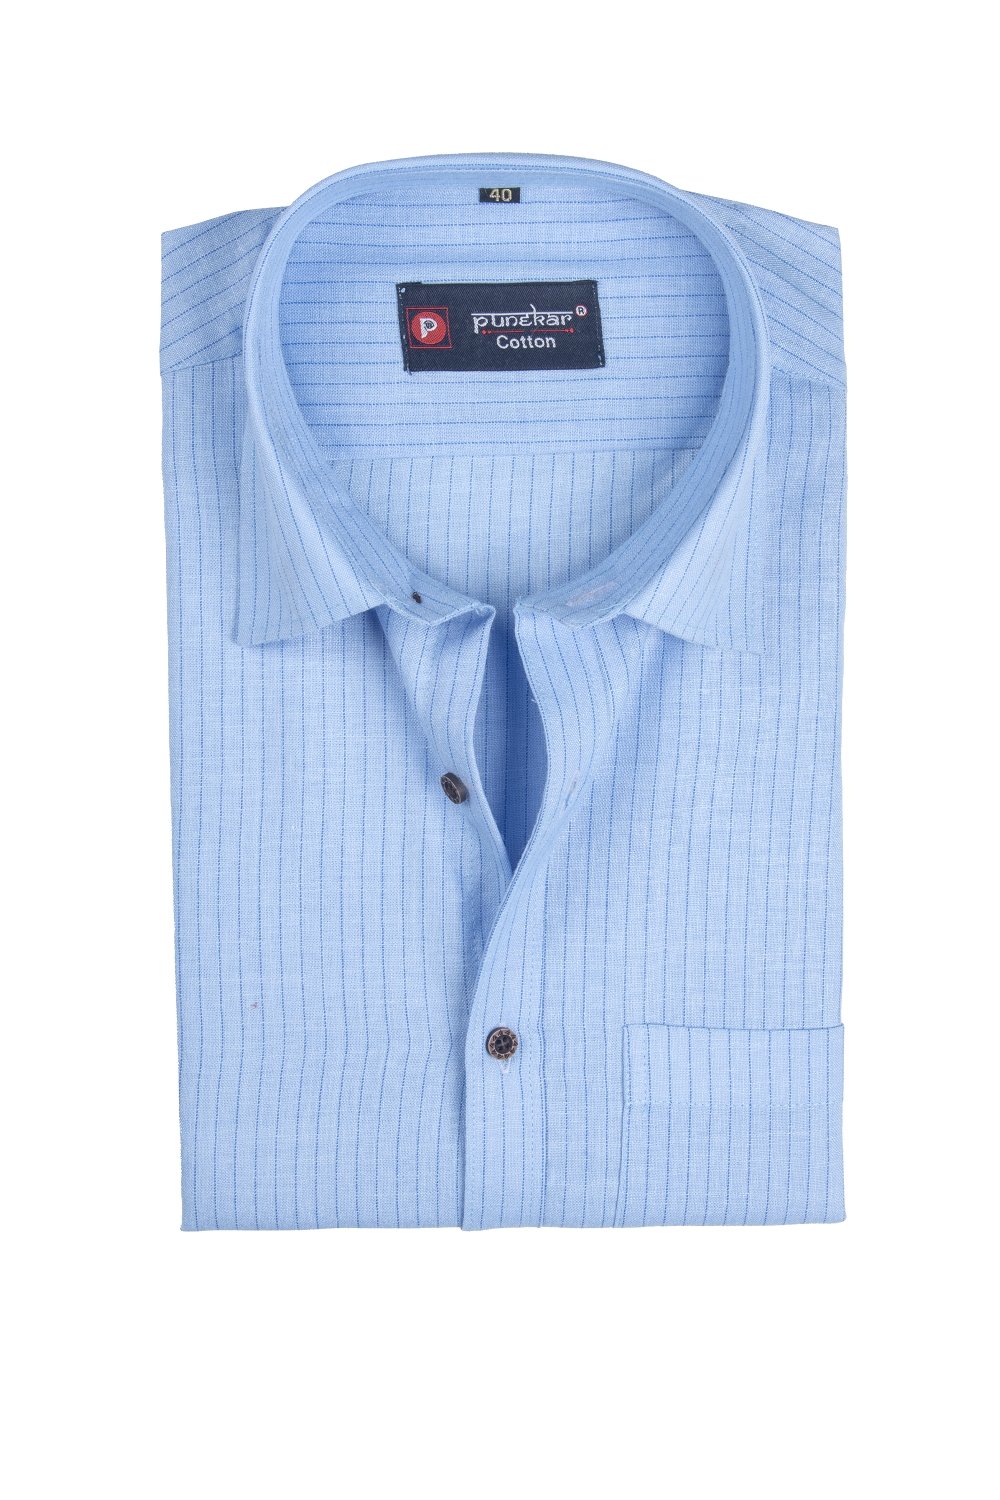 Punekar Cotton Light Blue Color Linning Criss Cross Woven Cotton Shirt for Men's. - Punekar Cotton